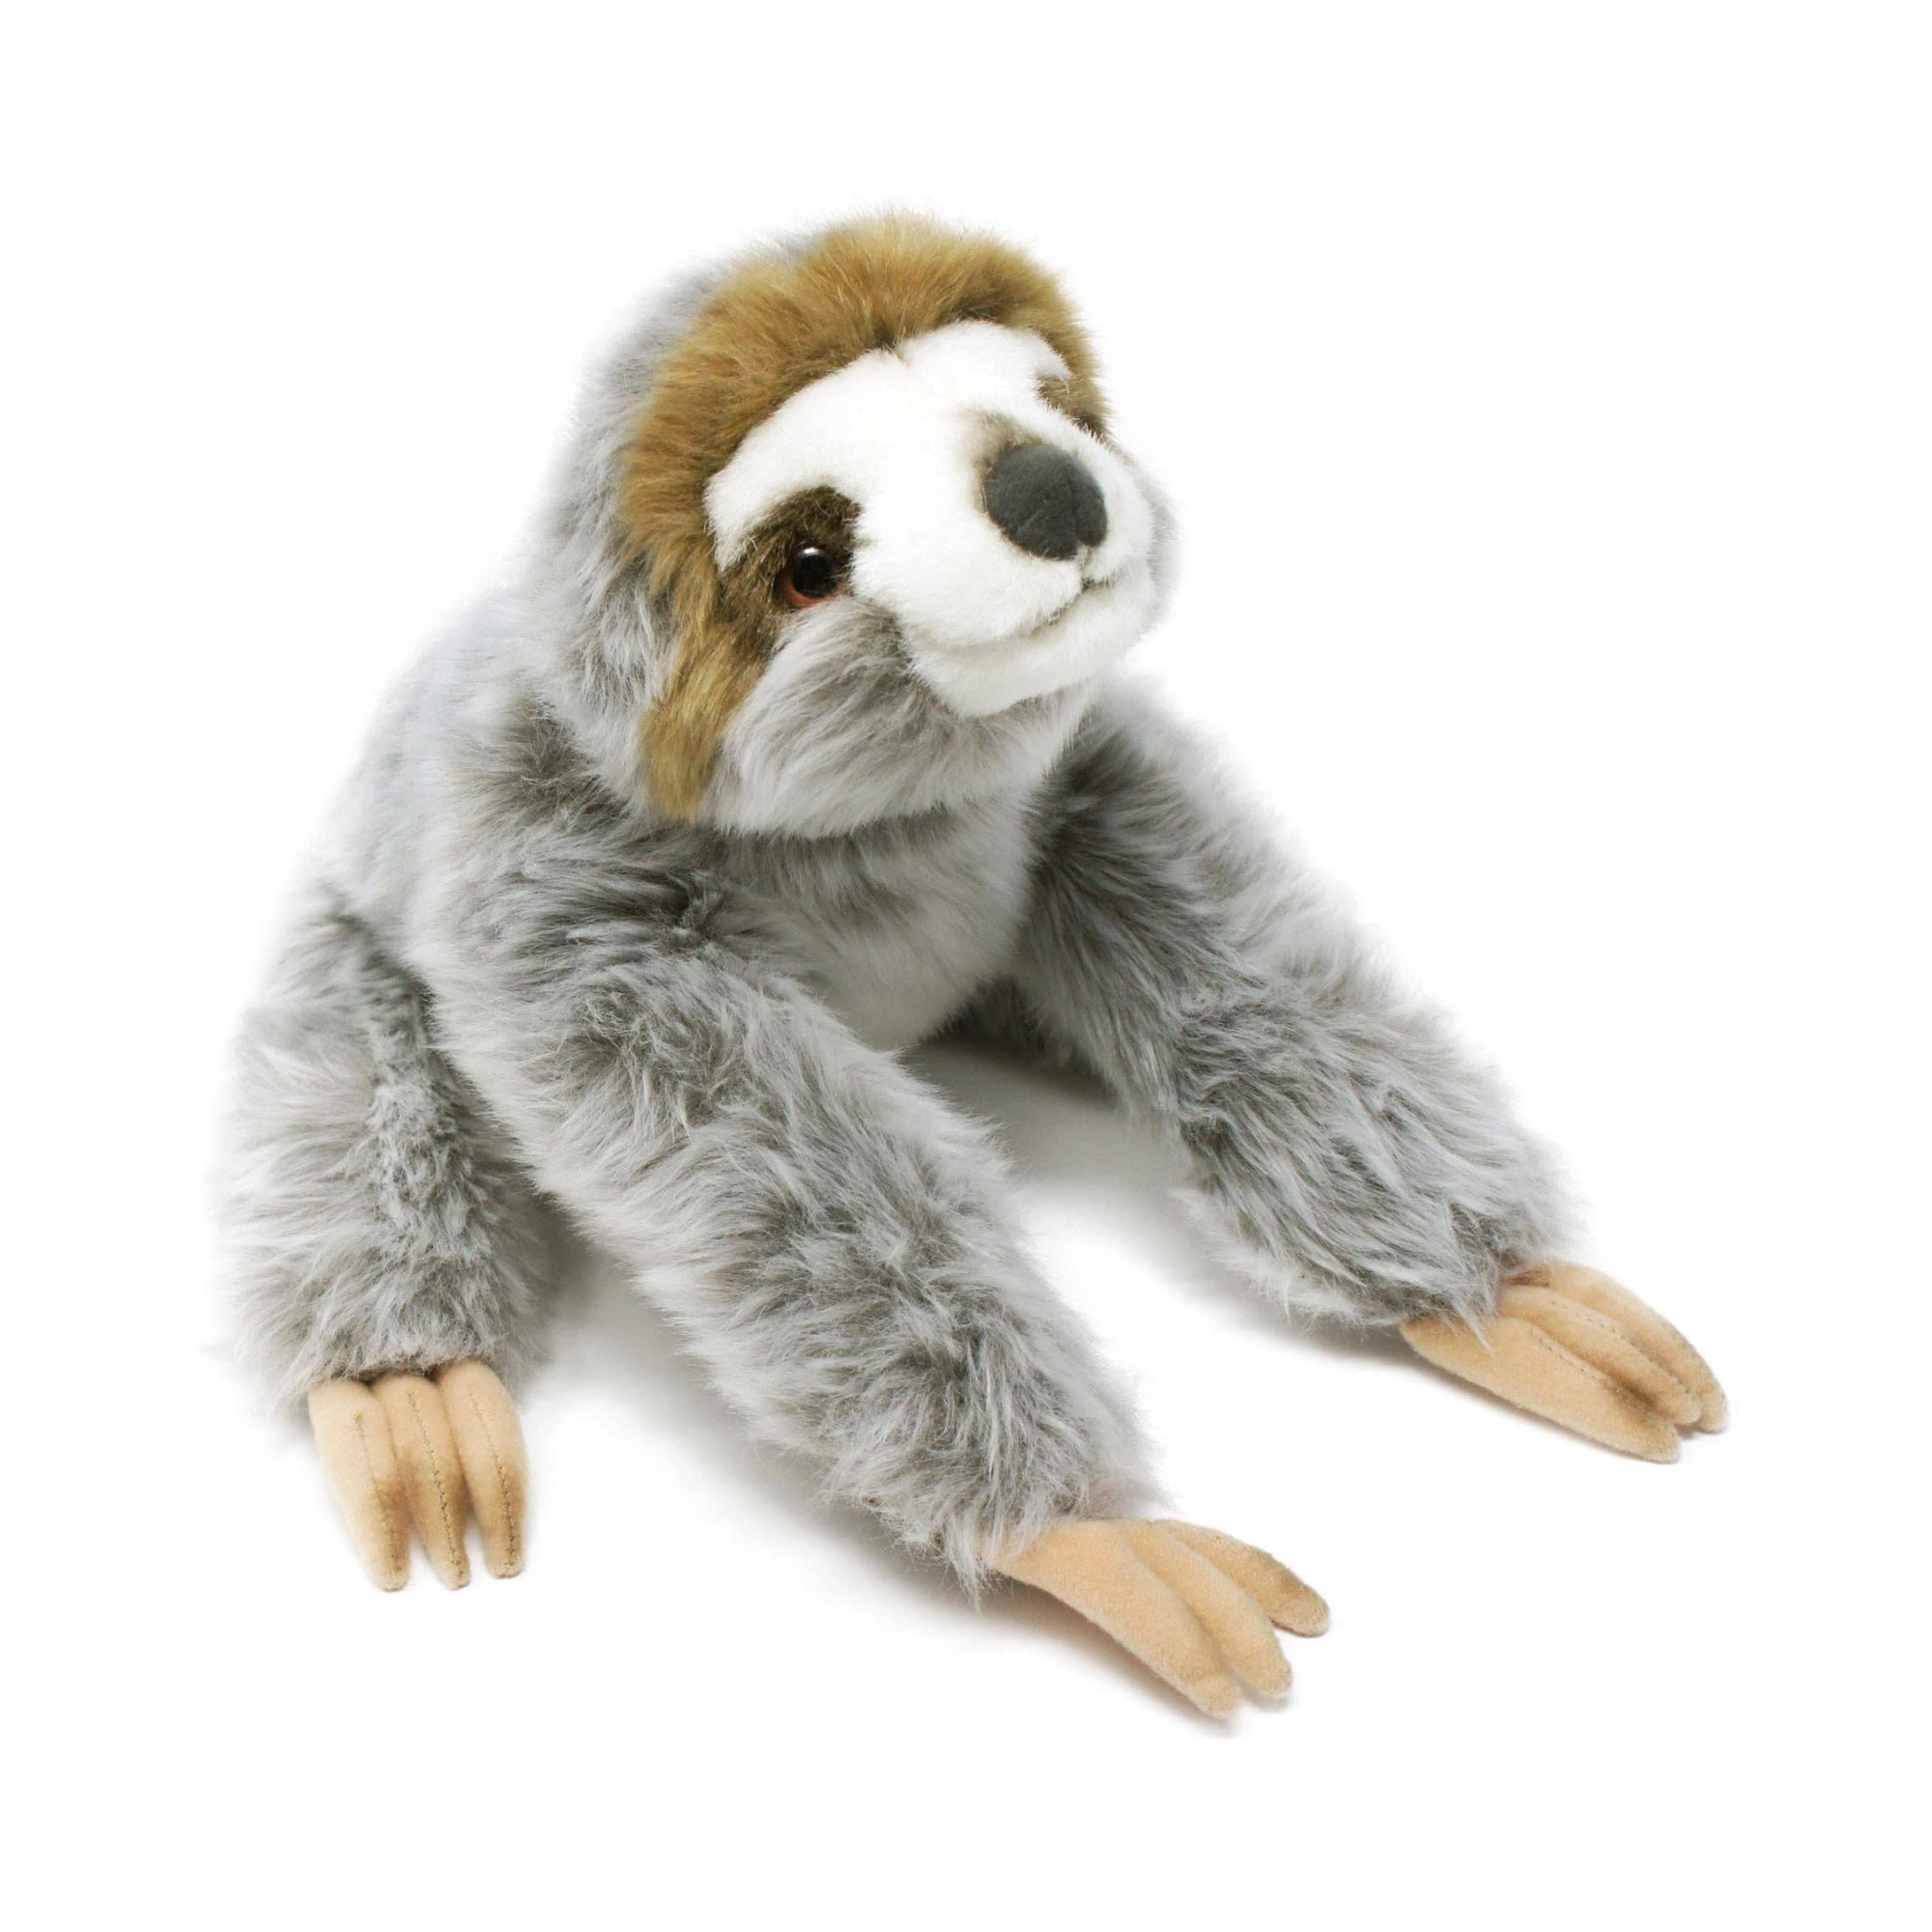 Siggy The Threetoed Sloth Baby | 9 Inch Stuffed Animal Plush